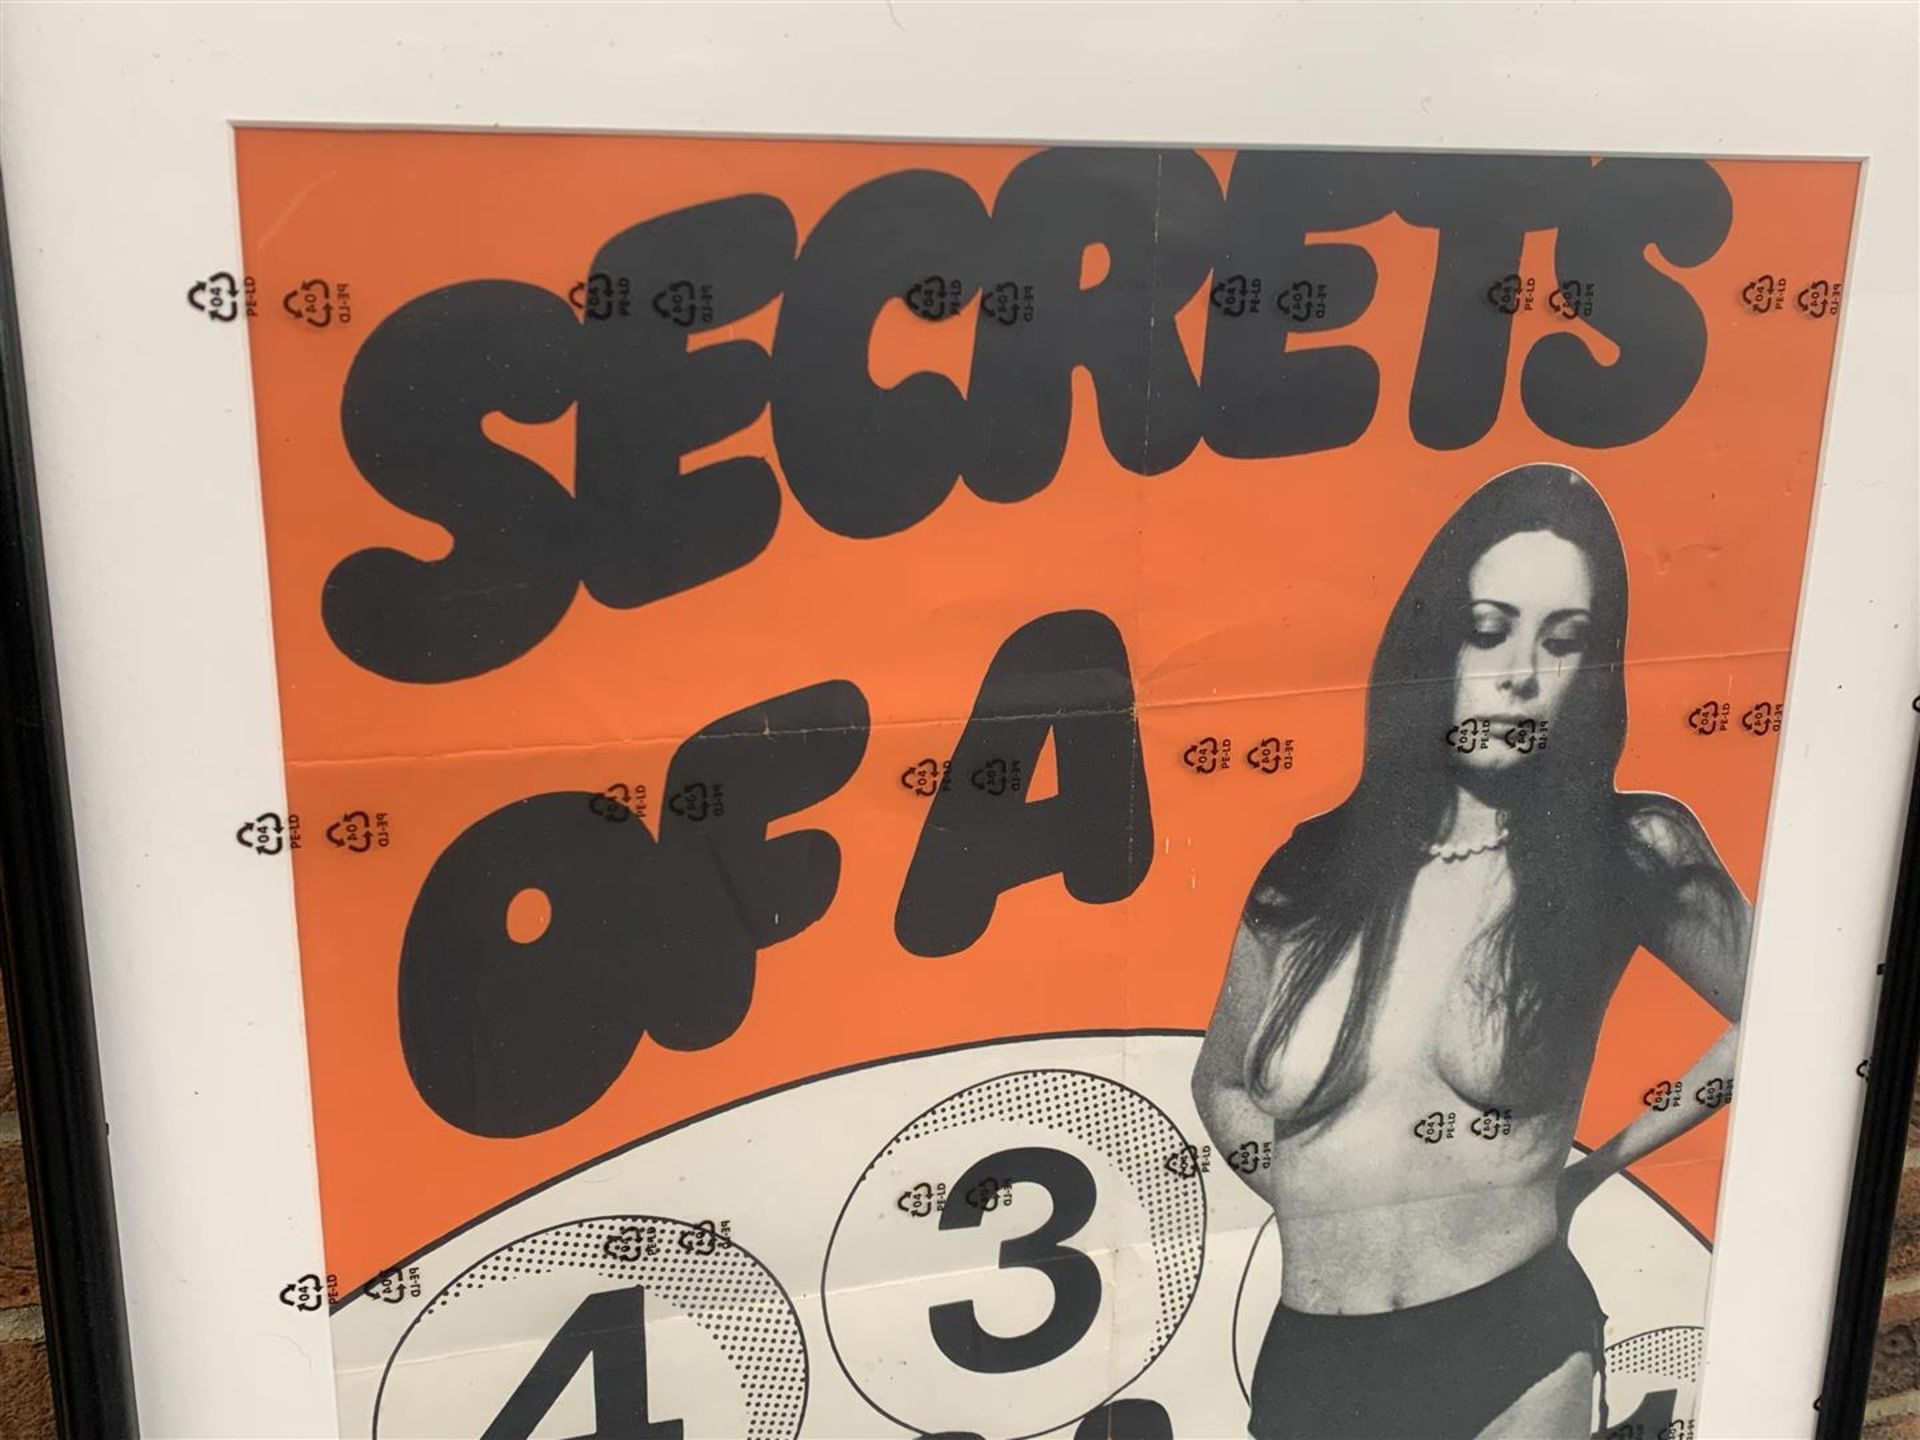 Original Framed Secrets Of A Call Girl" Poster" - Image 2 of 2